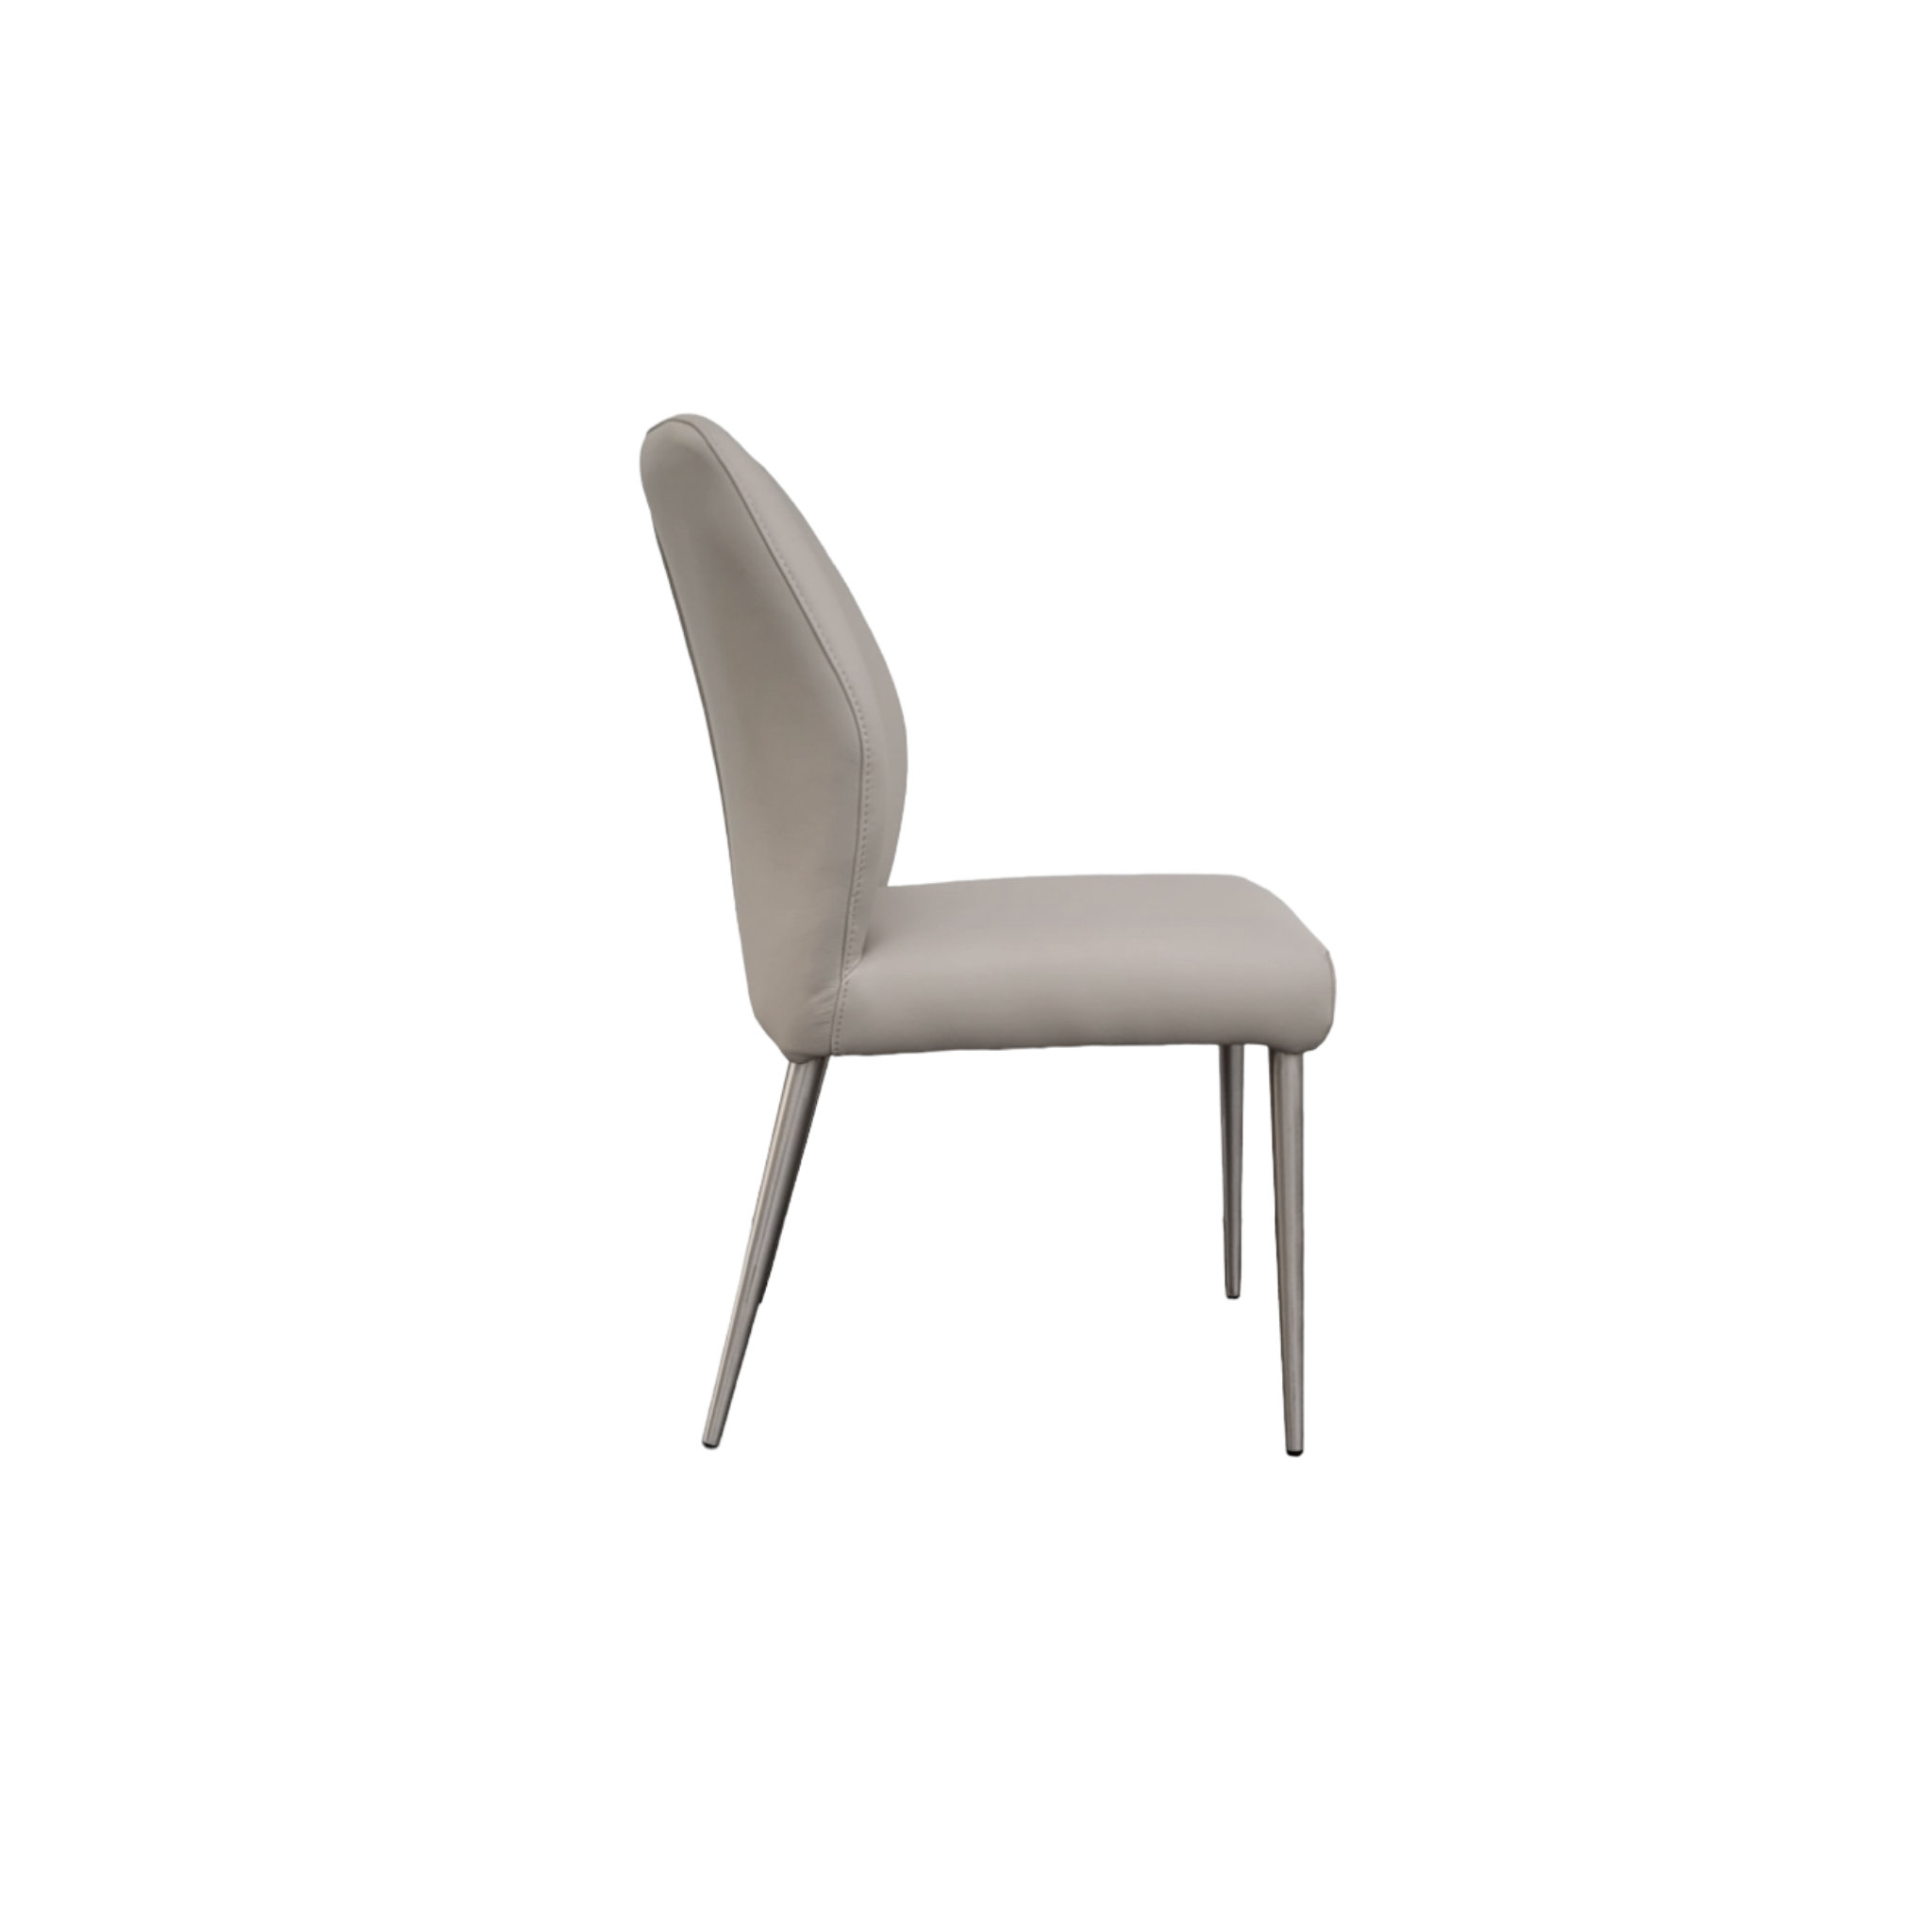 Gabbana Light Grey Leather Dining Chair